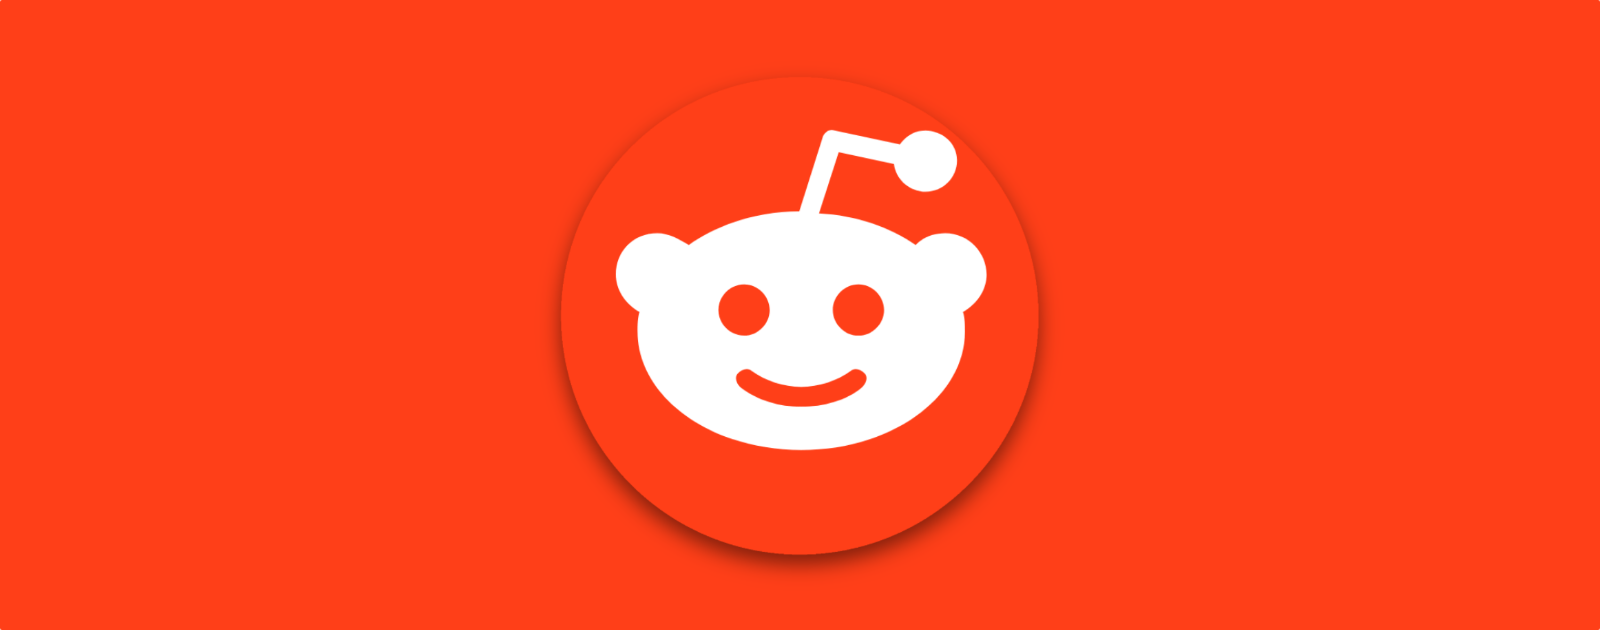 Reddit Logo - Reddit is Beholden to Marketing Agencies With Agendas - The Mac Observer